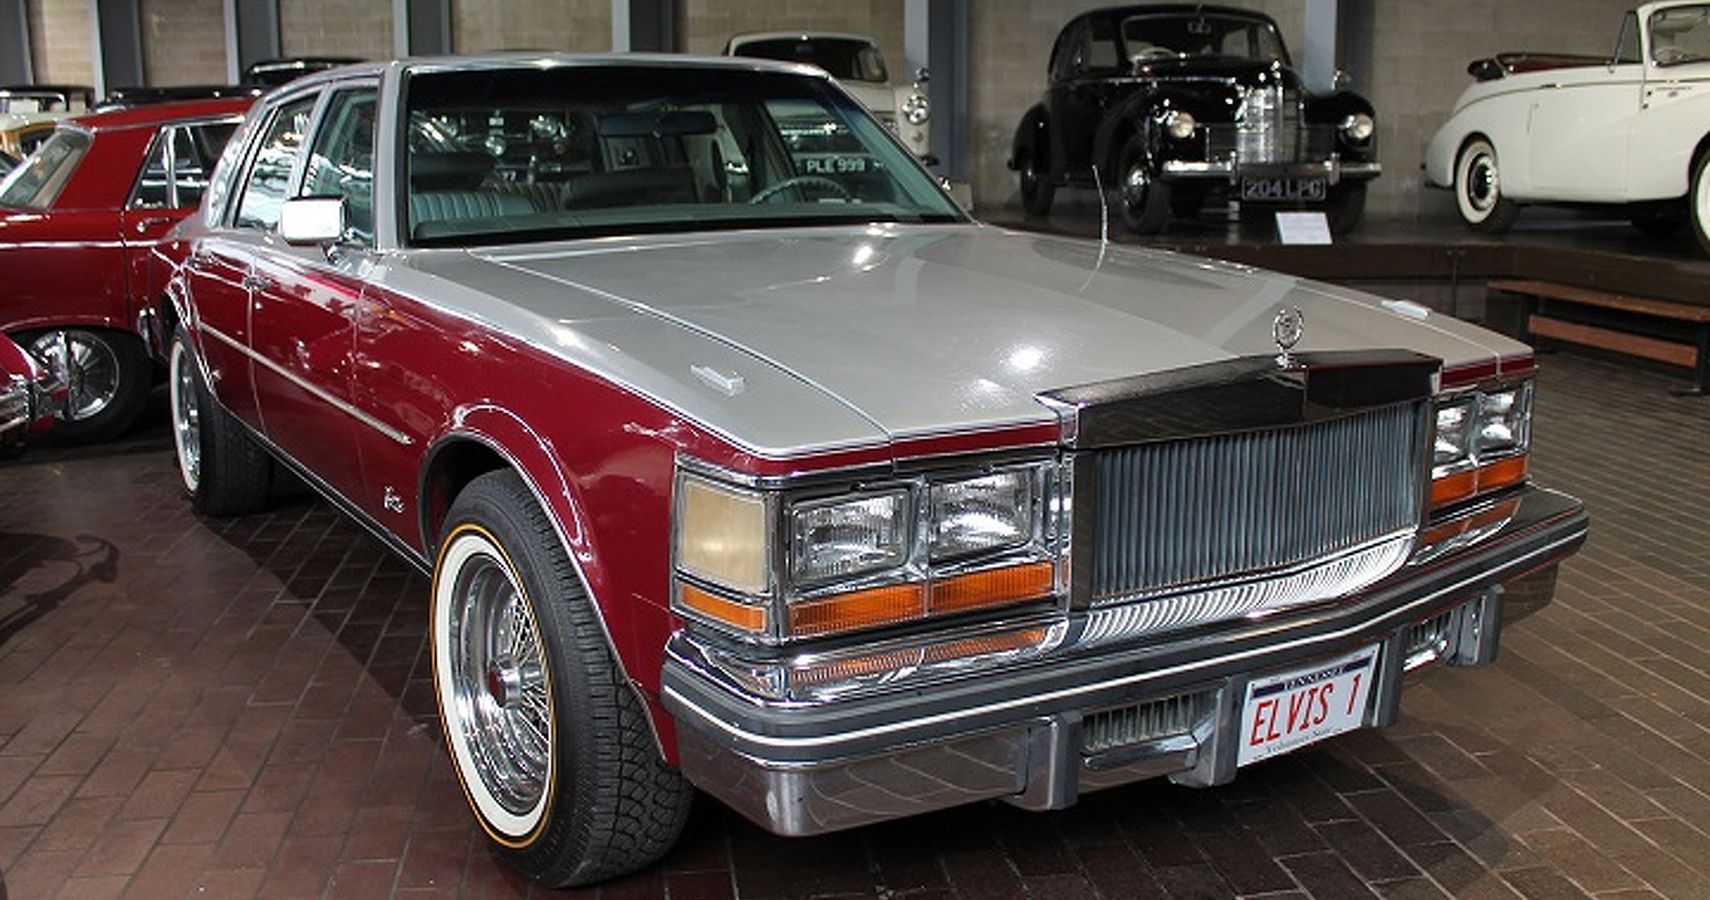 1977 Cadillac Seville: A Strange Choice